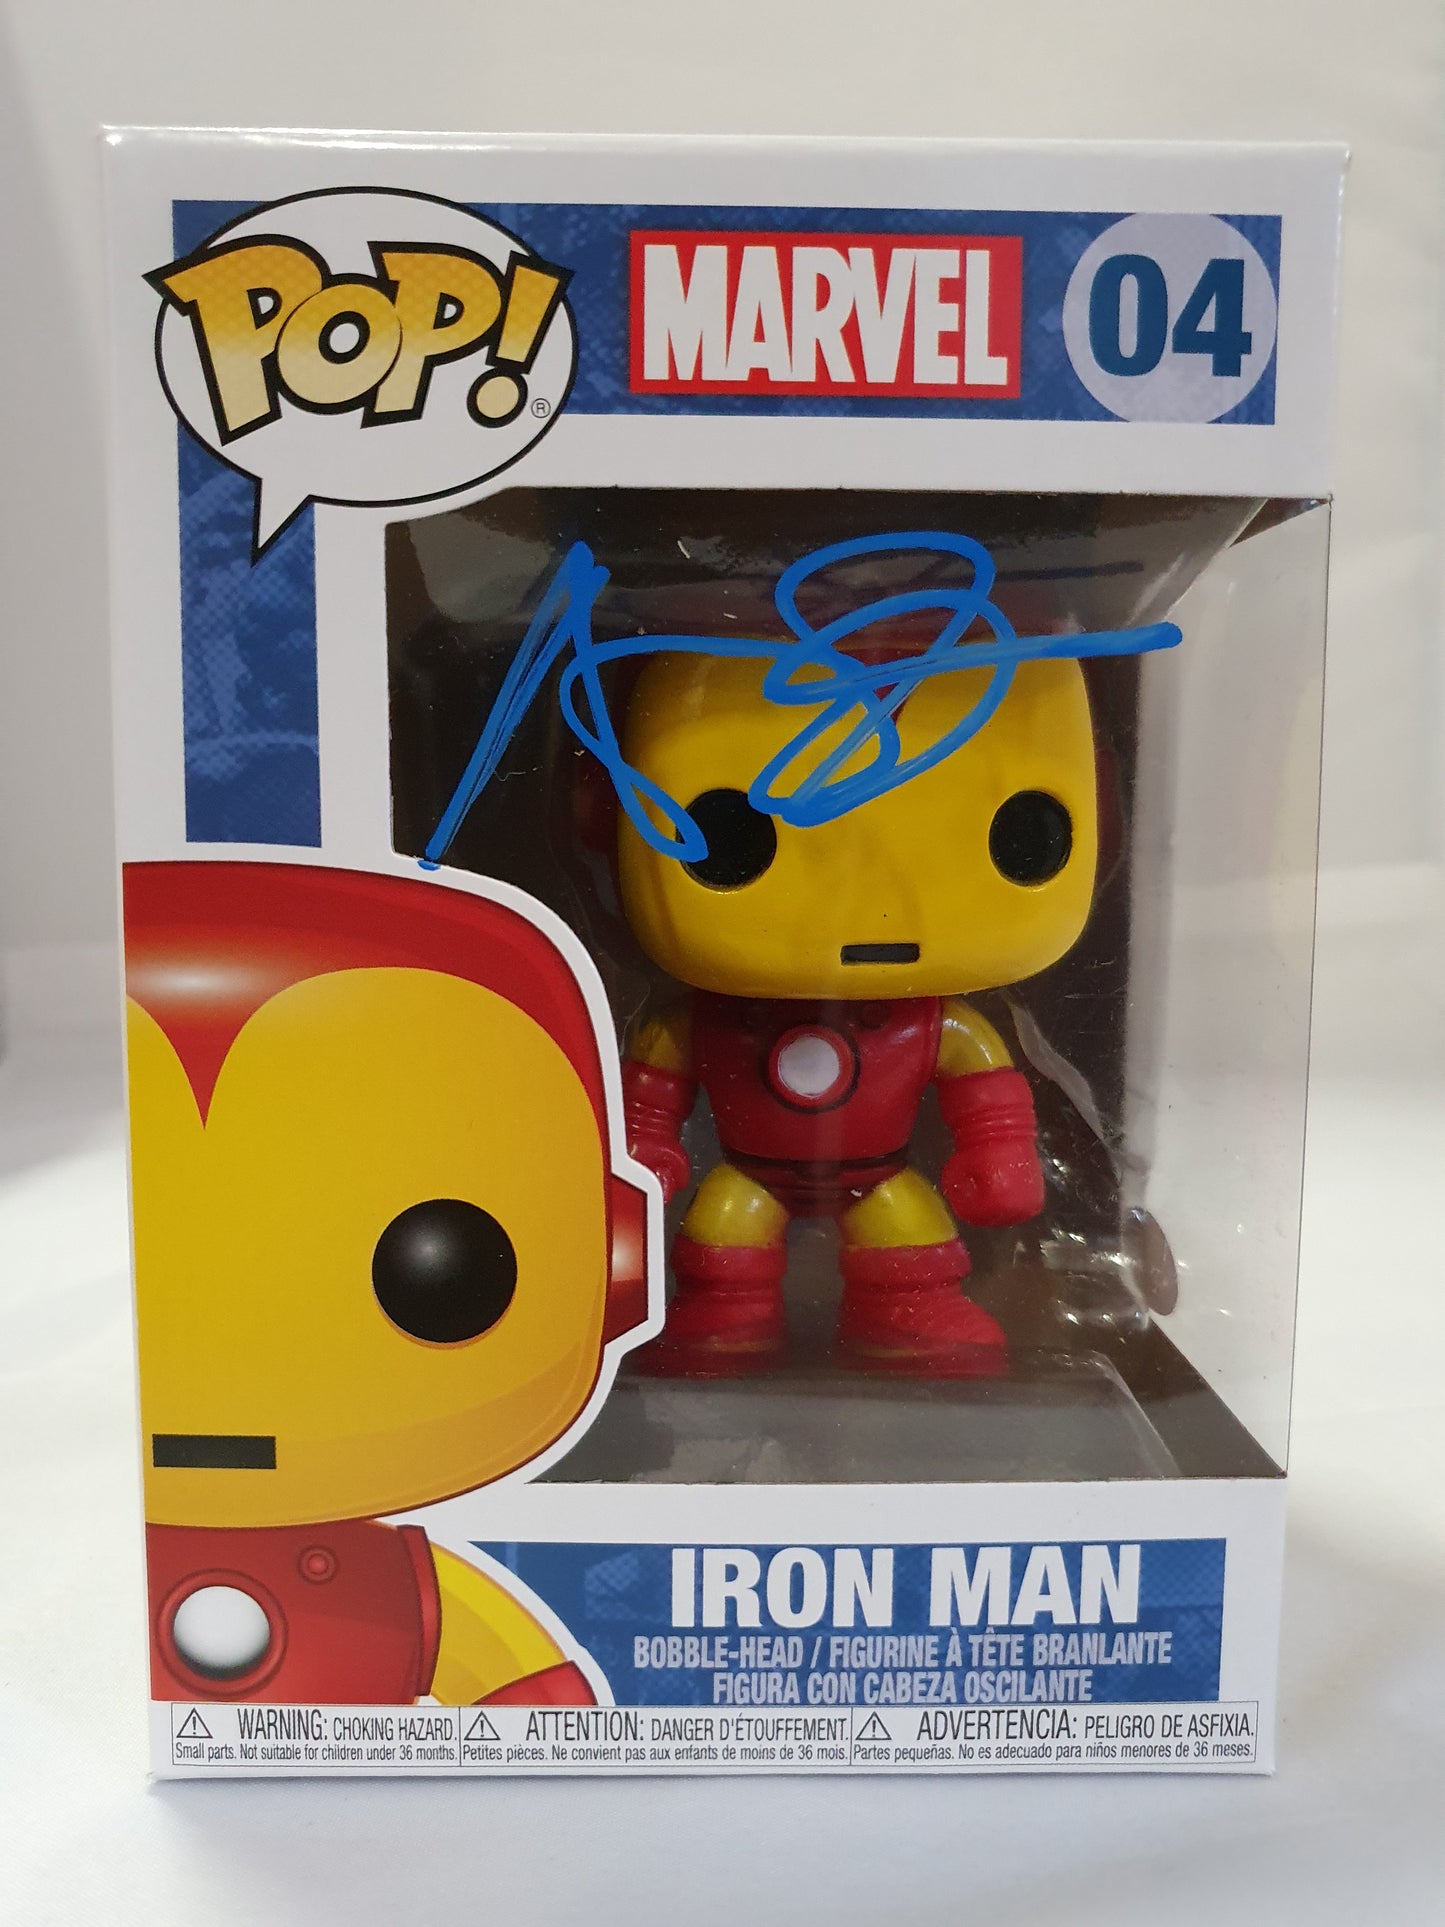 Marvel - Iron Man #04 Signed Pop! Vinyl